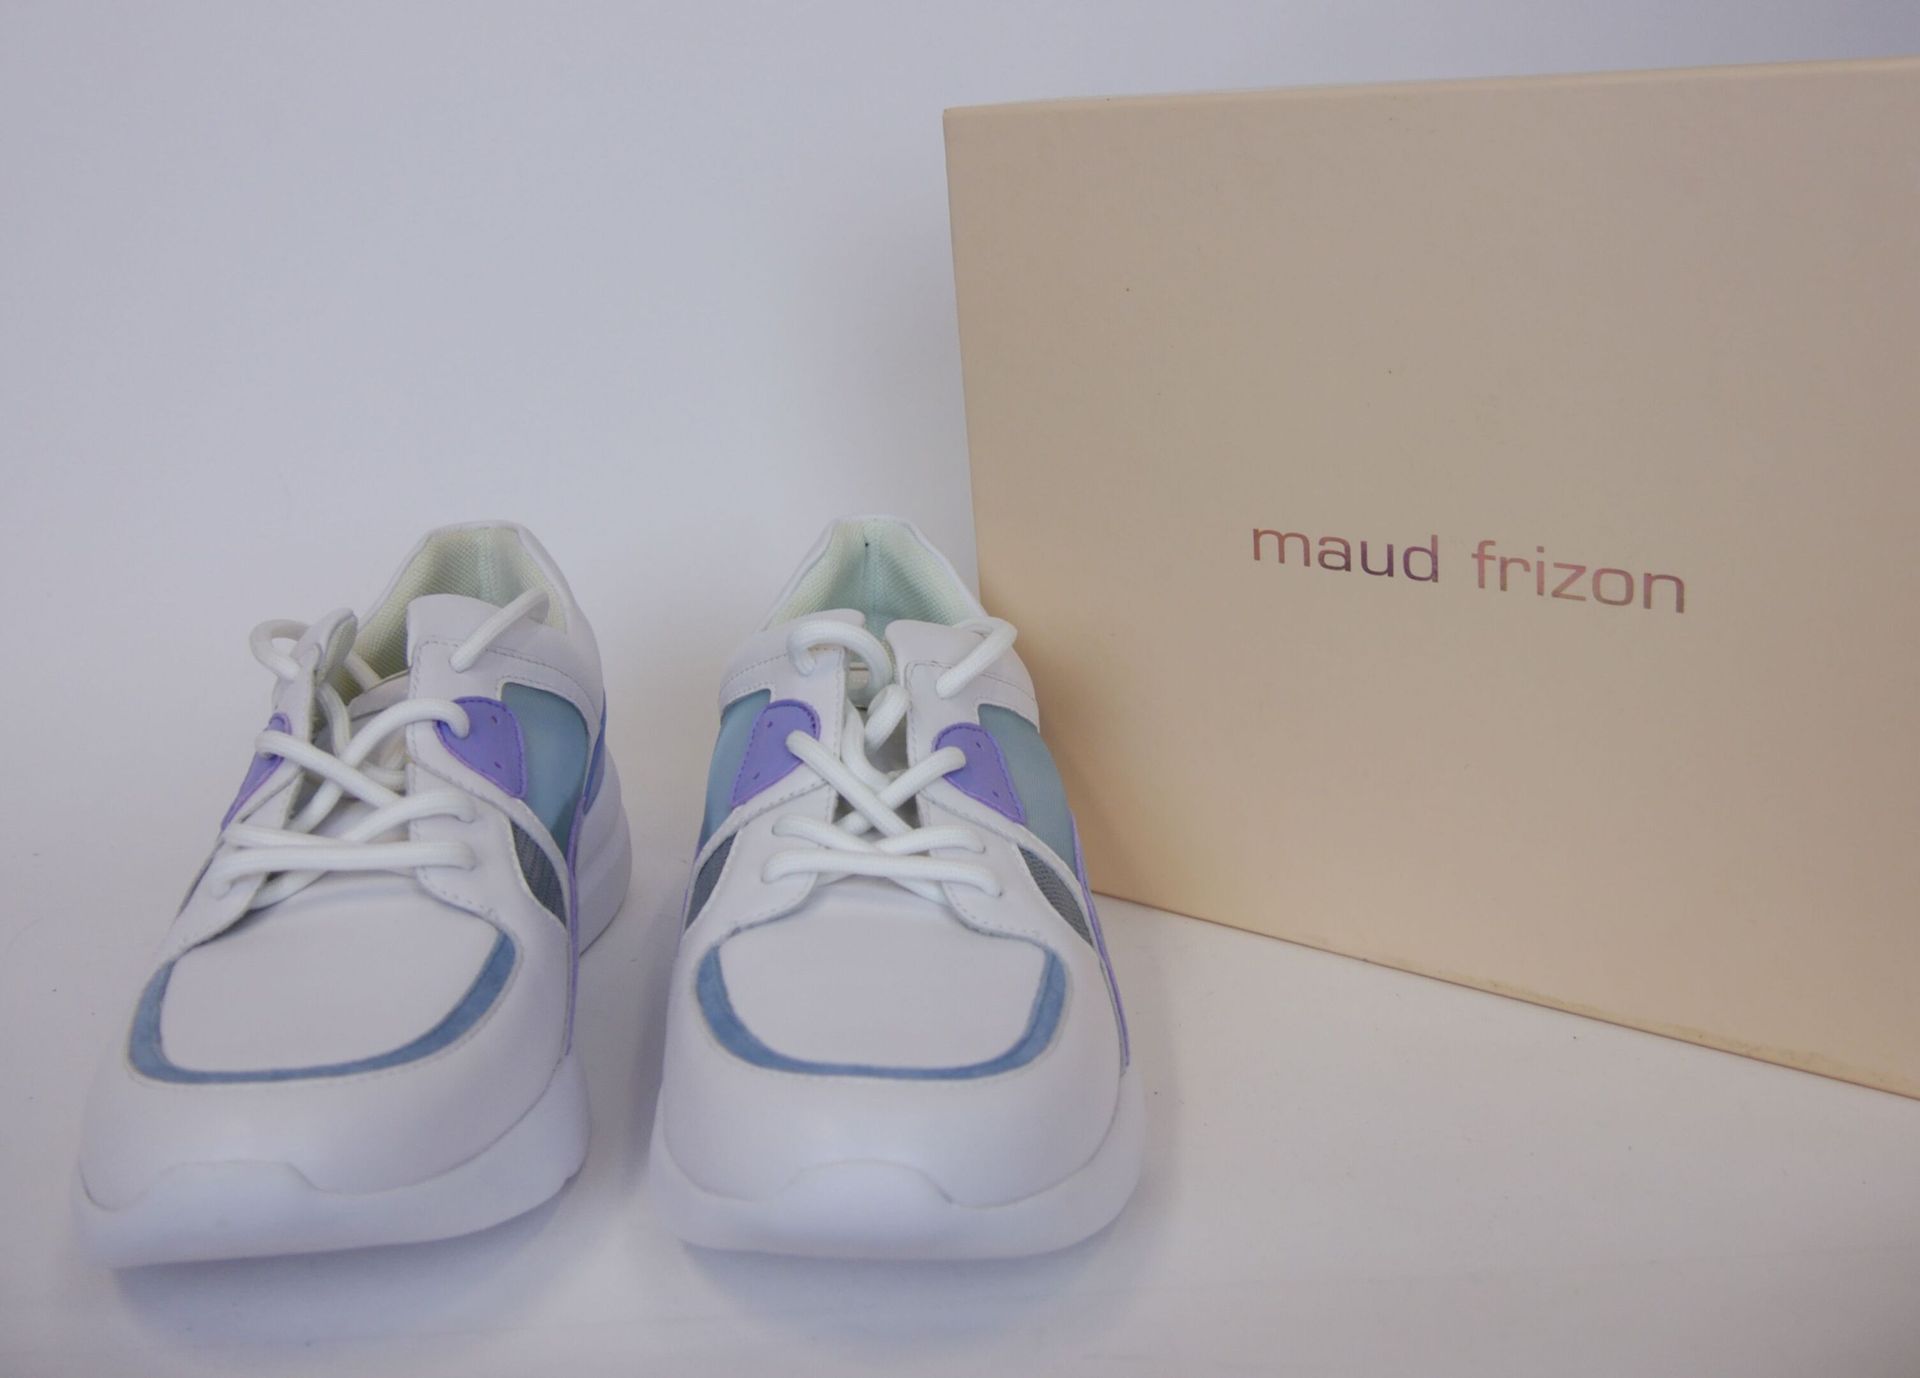 Null 马德-弗里宗(MAUD FRIZON)

一双白色皮制运动鞋。尺寸41



拍卖会将于2021年12月20日（星期一）在巴黎第十五届会议上进行，只接&hellip;